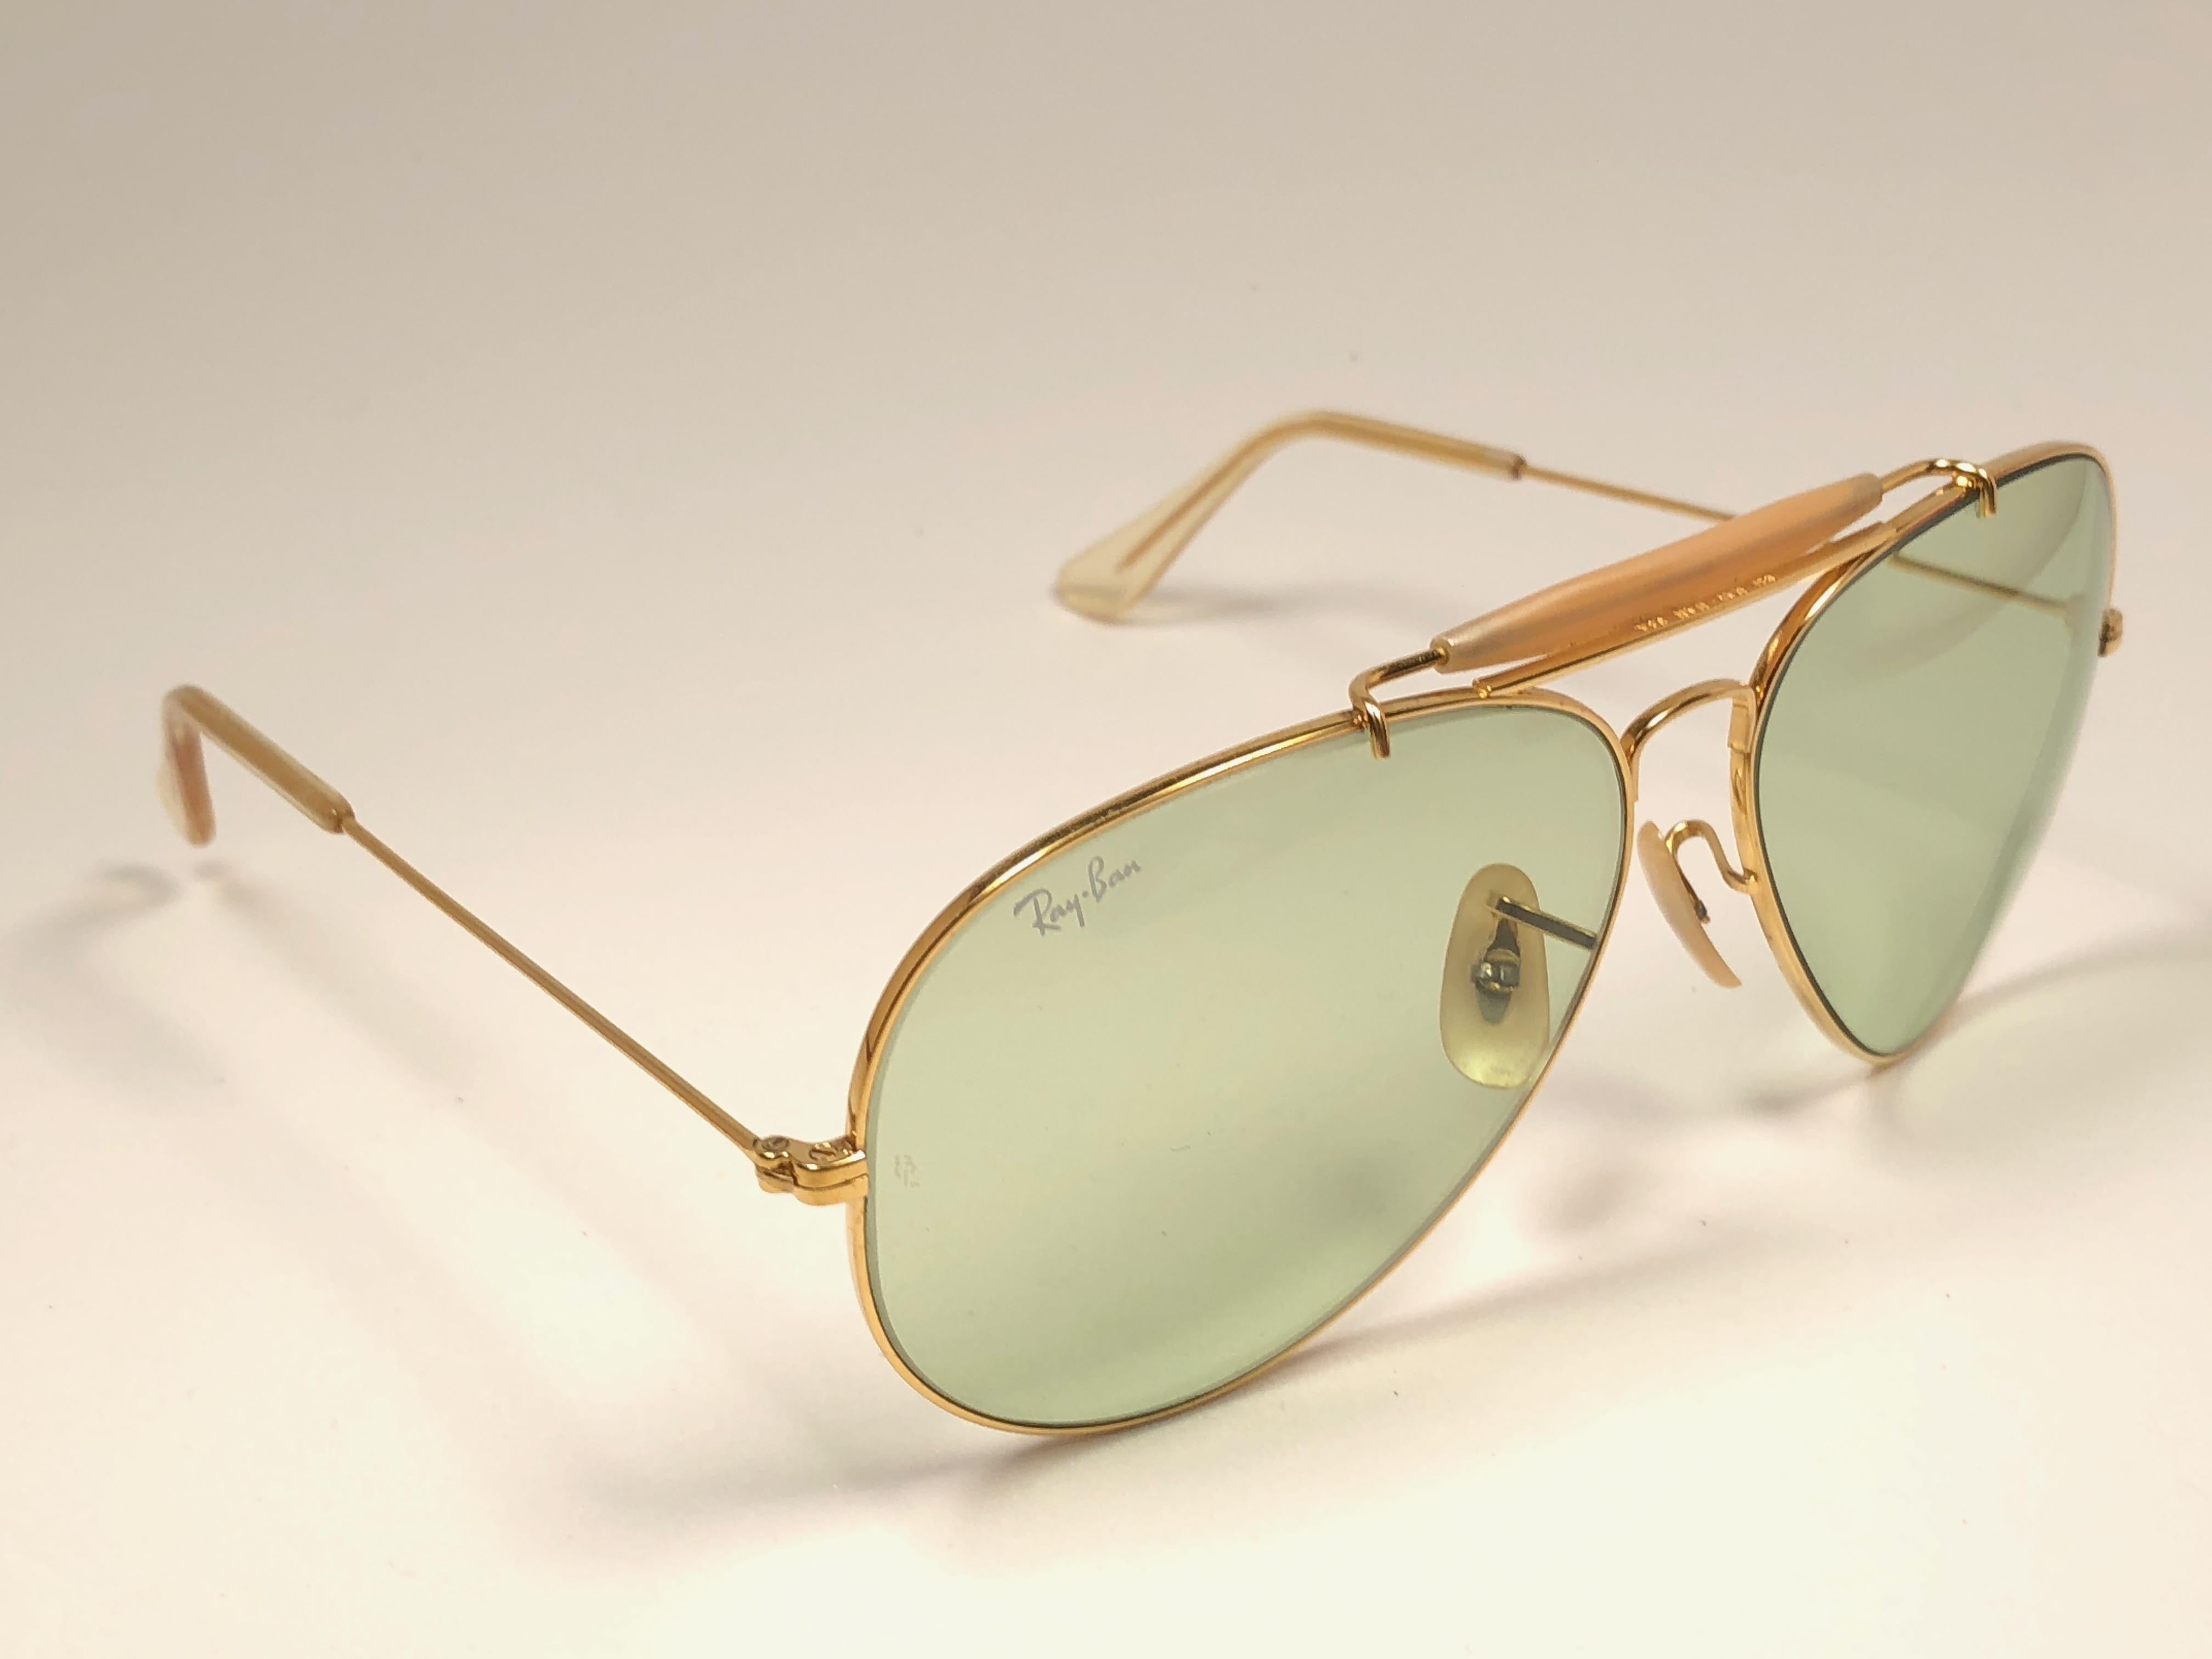 Mint Ray Ban Vintage Aviator Gold Grün Gläser 62Mm B / L Sonnenbrille:: 1970er (Braun)